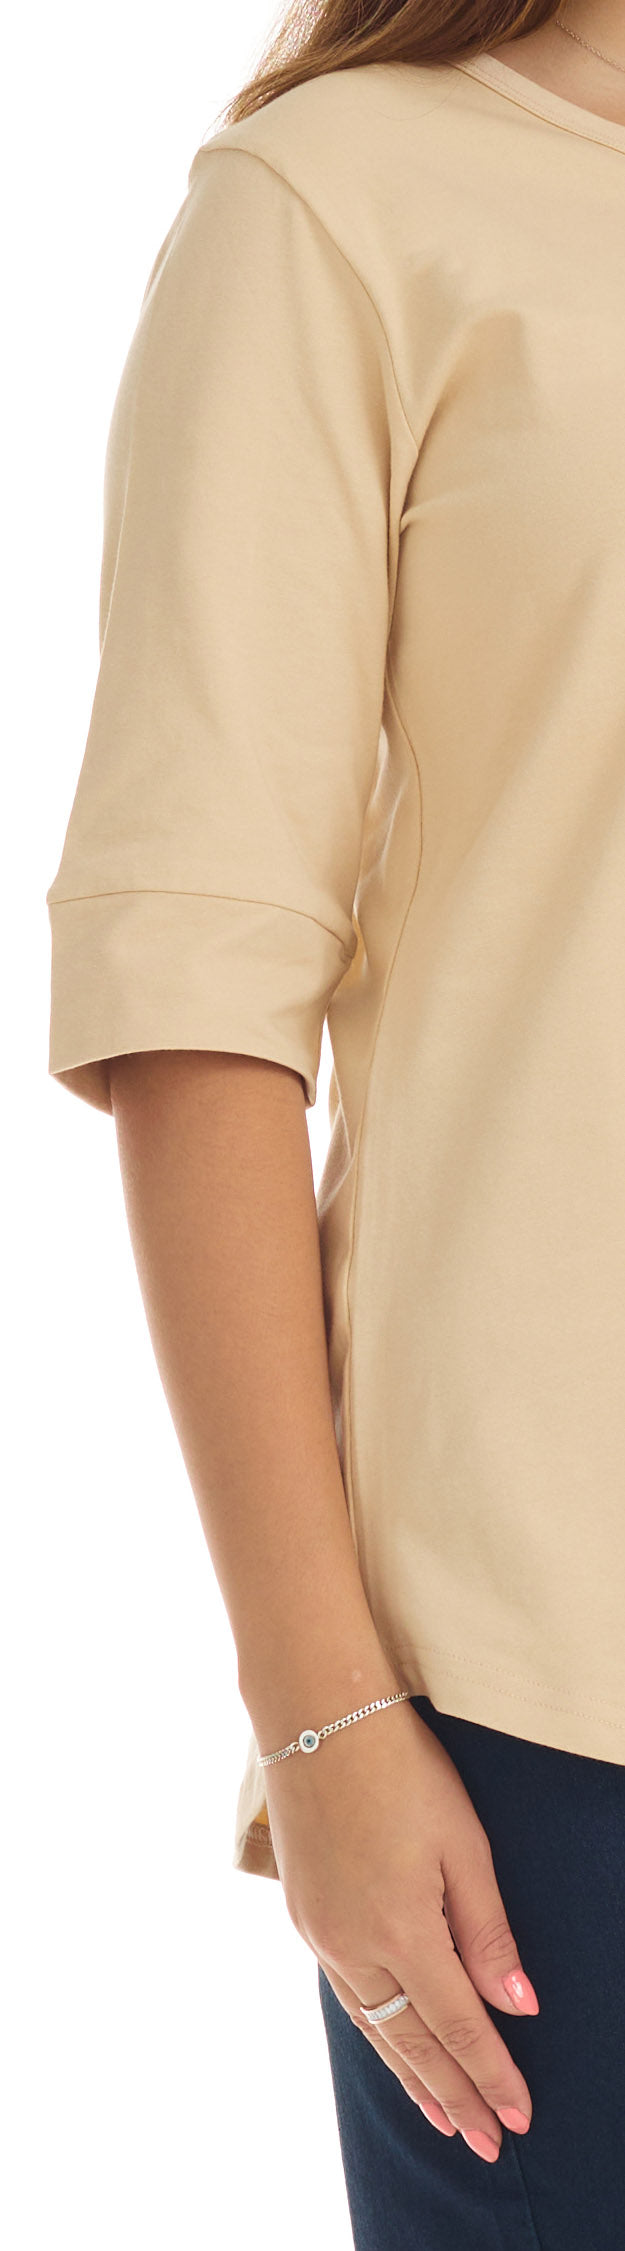 elbow cuff sleeve top